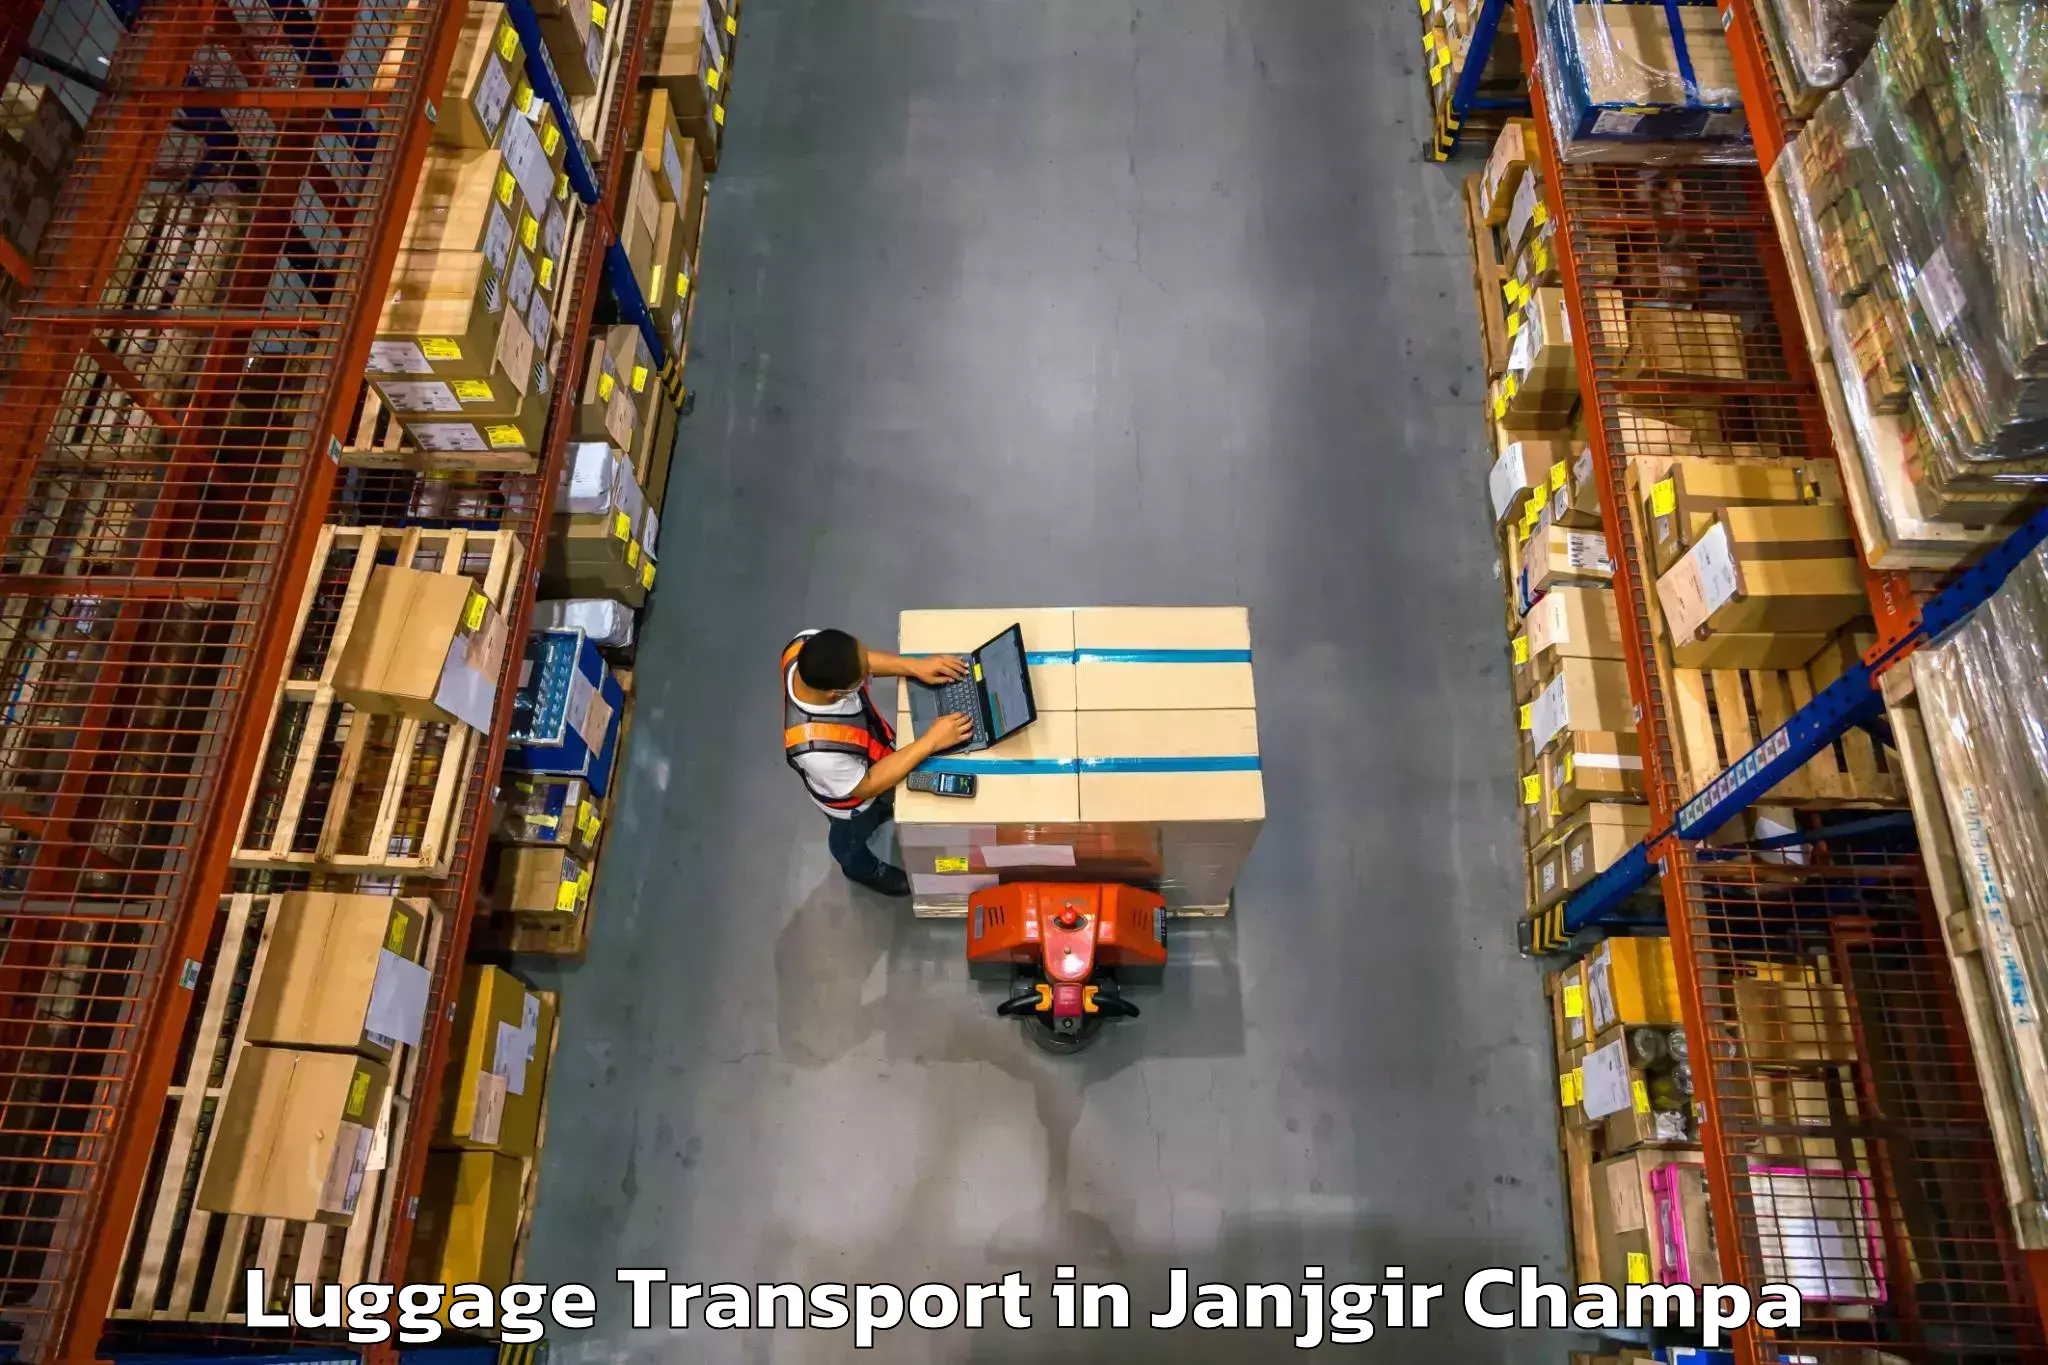 Domestic luggage transport in Janjgir Champa